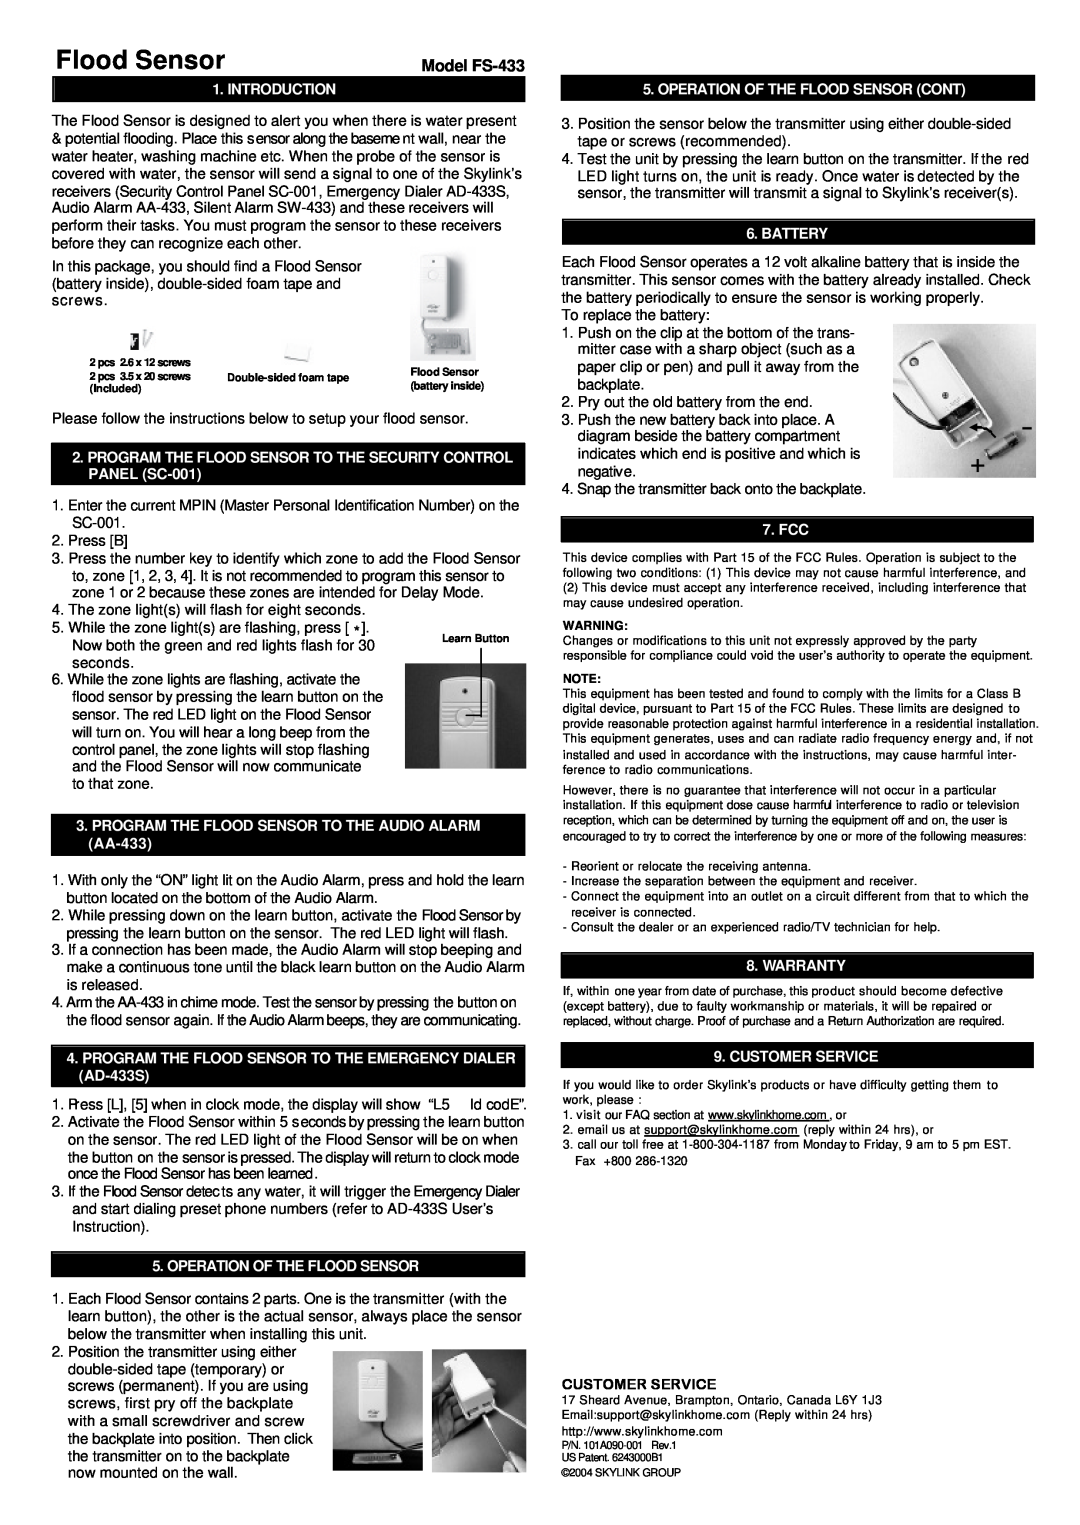 SkyLink warranty Flood Sensor, Model FS-433, Customer Service 